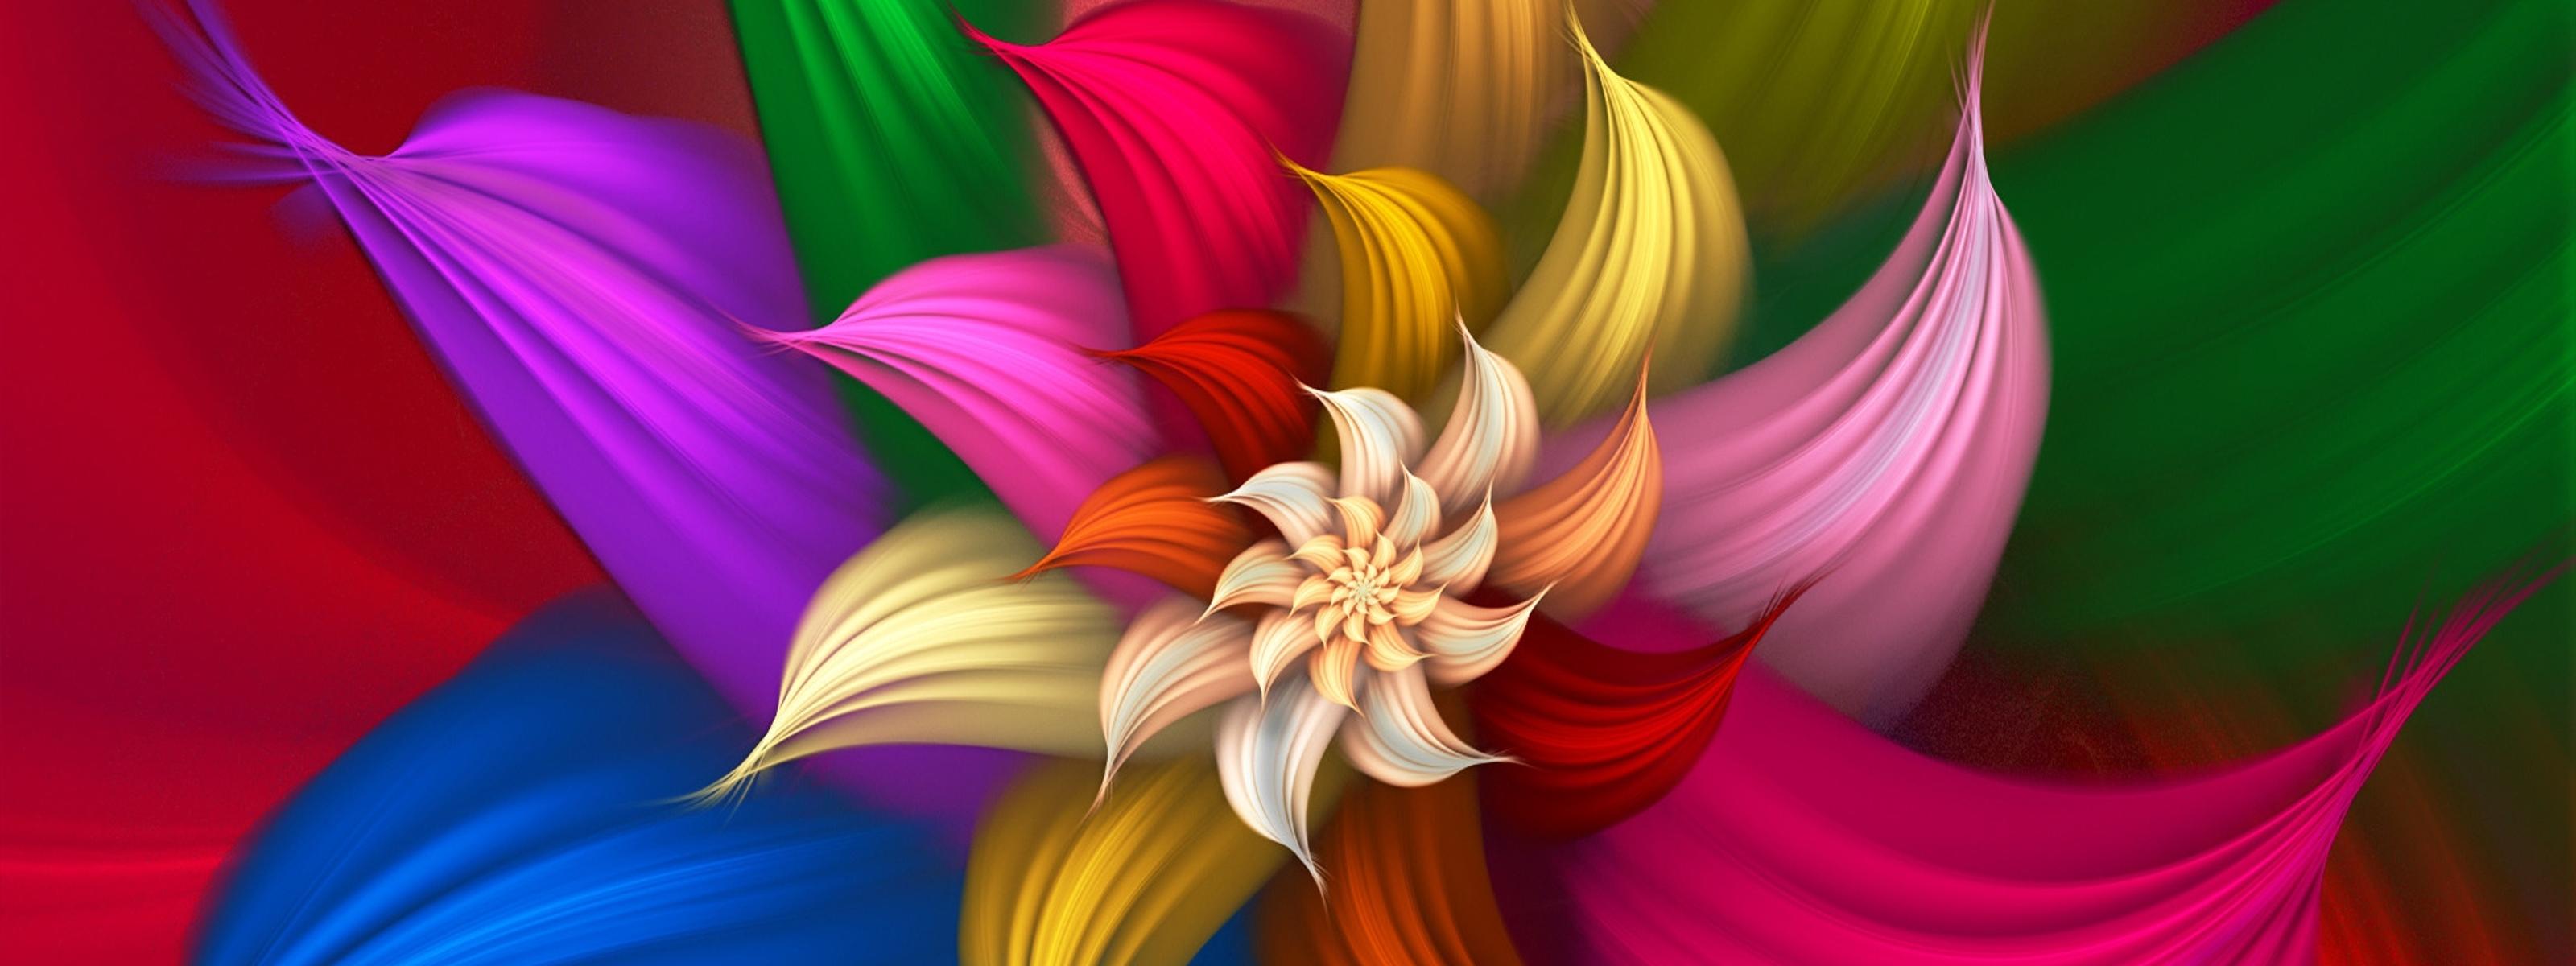 Colorful satiny bloom art wallpaper